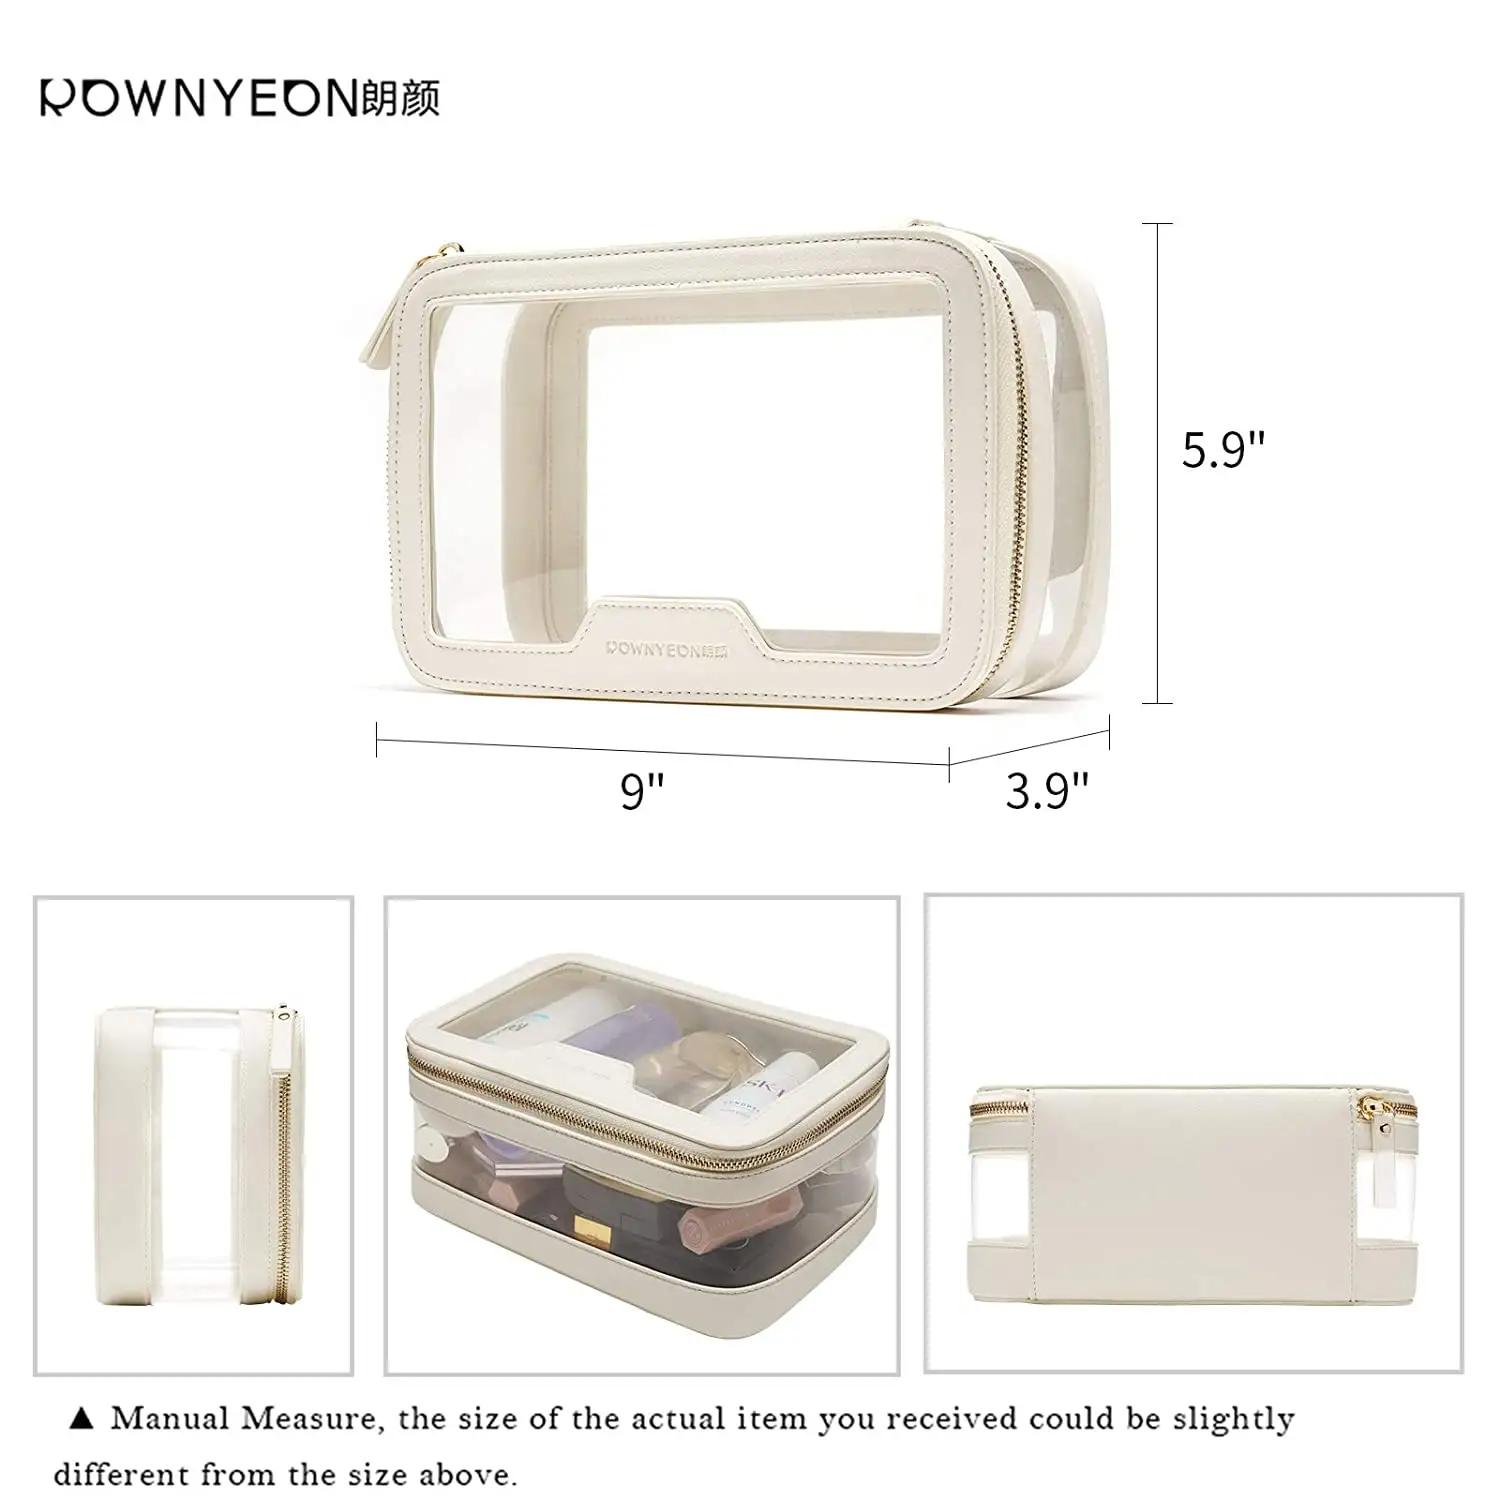 Rownyeon حقيبة أدوات التجميل الواضحة للسفر متعددة الأغراض منظم مستحضرات التجميل المحمول حقيبة تخزين شفافة